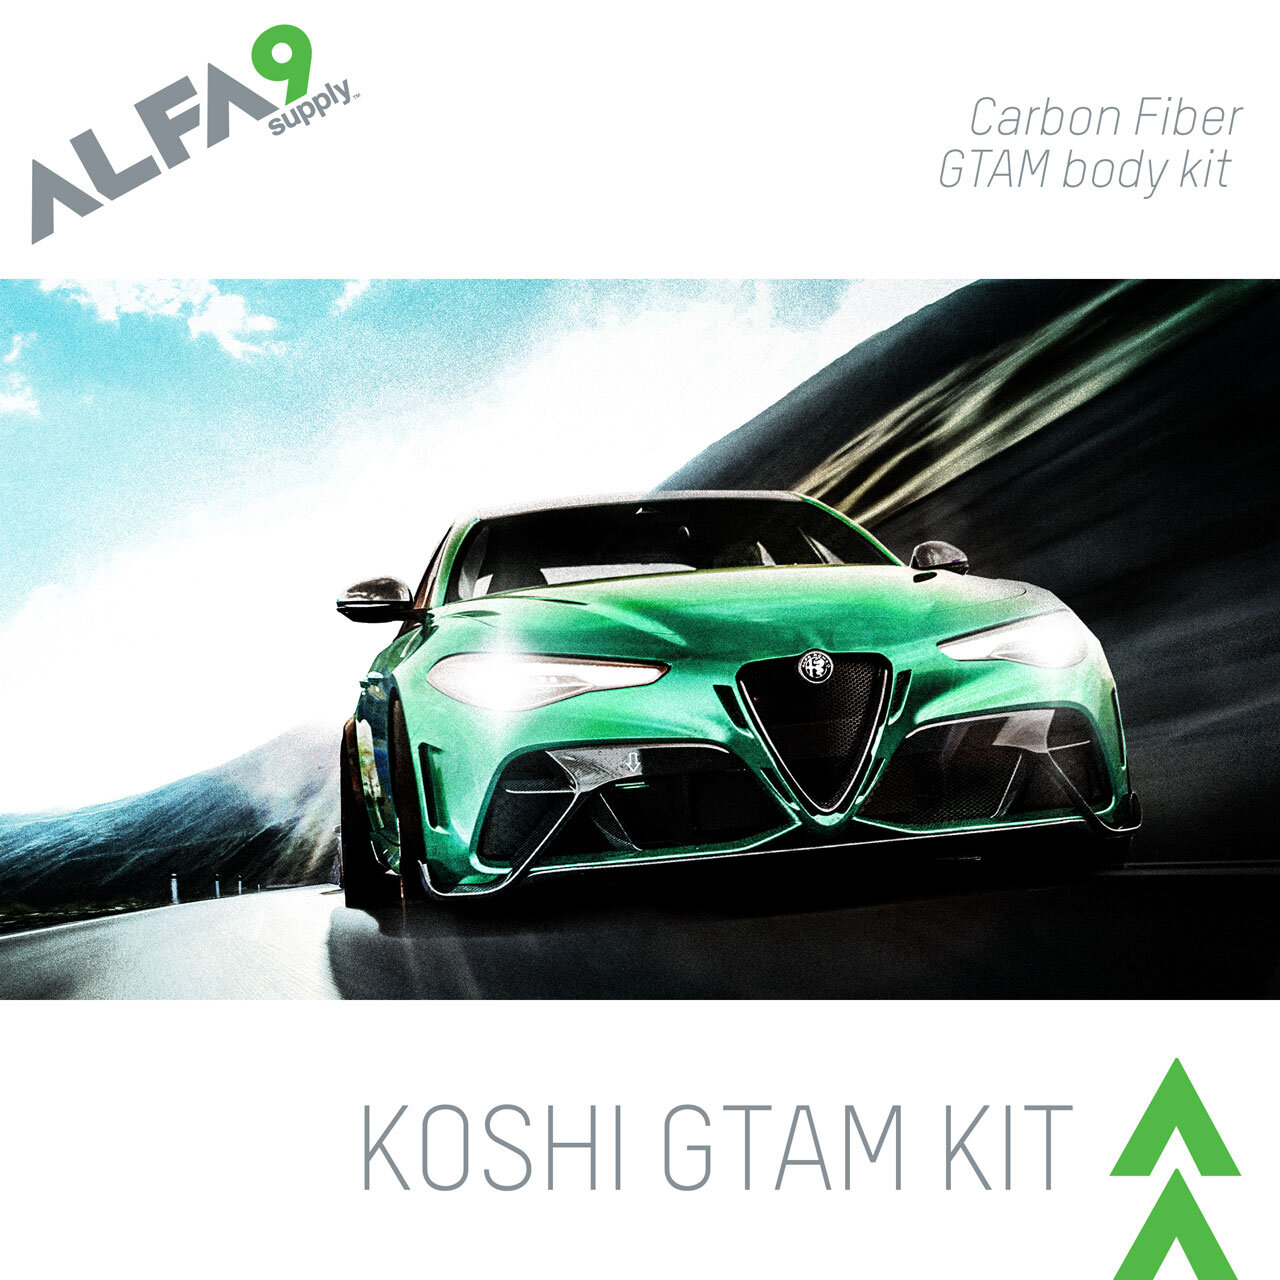 Alfa9 - - Giulia GTAM Carbon Fiber Kit — Alfa9 Supply